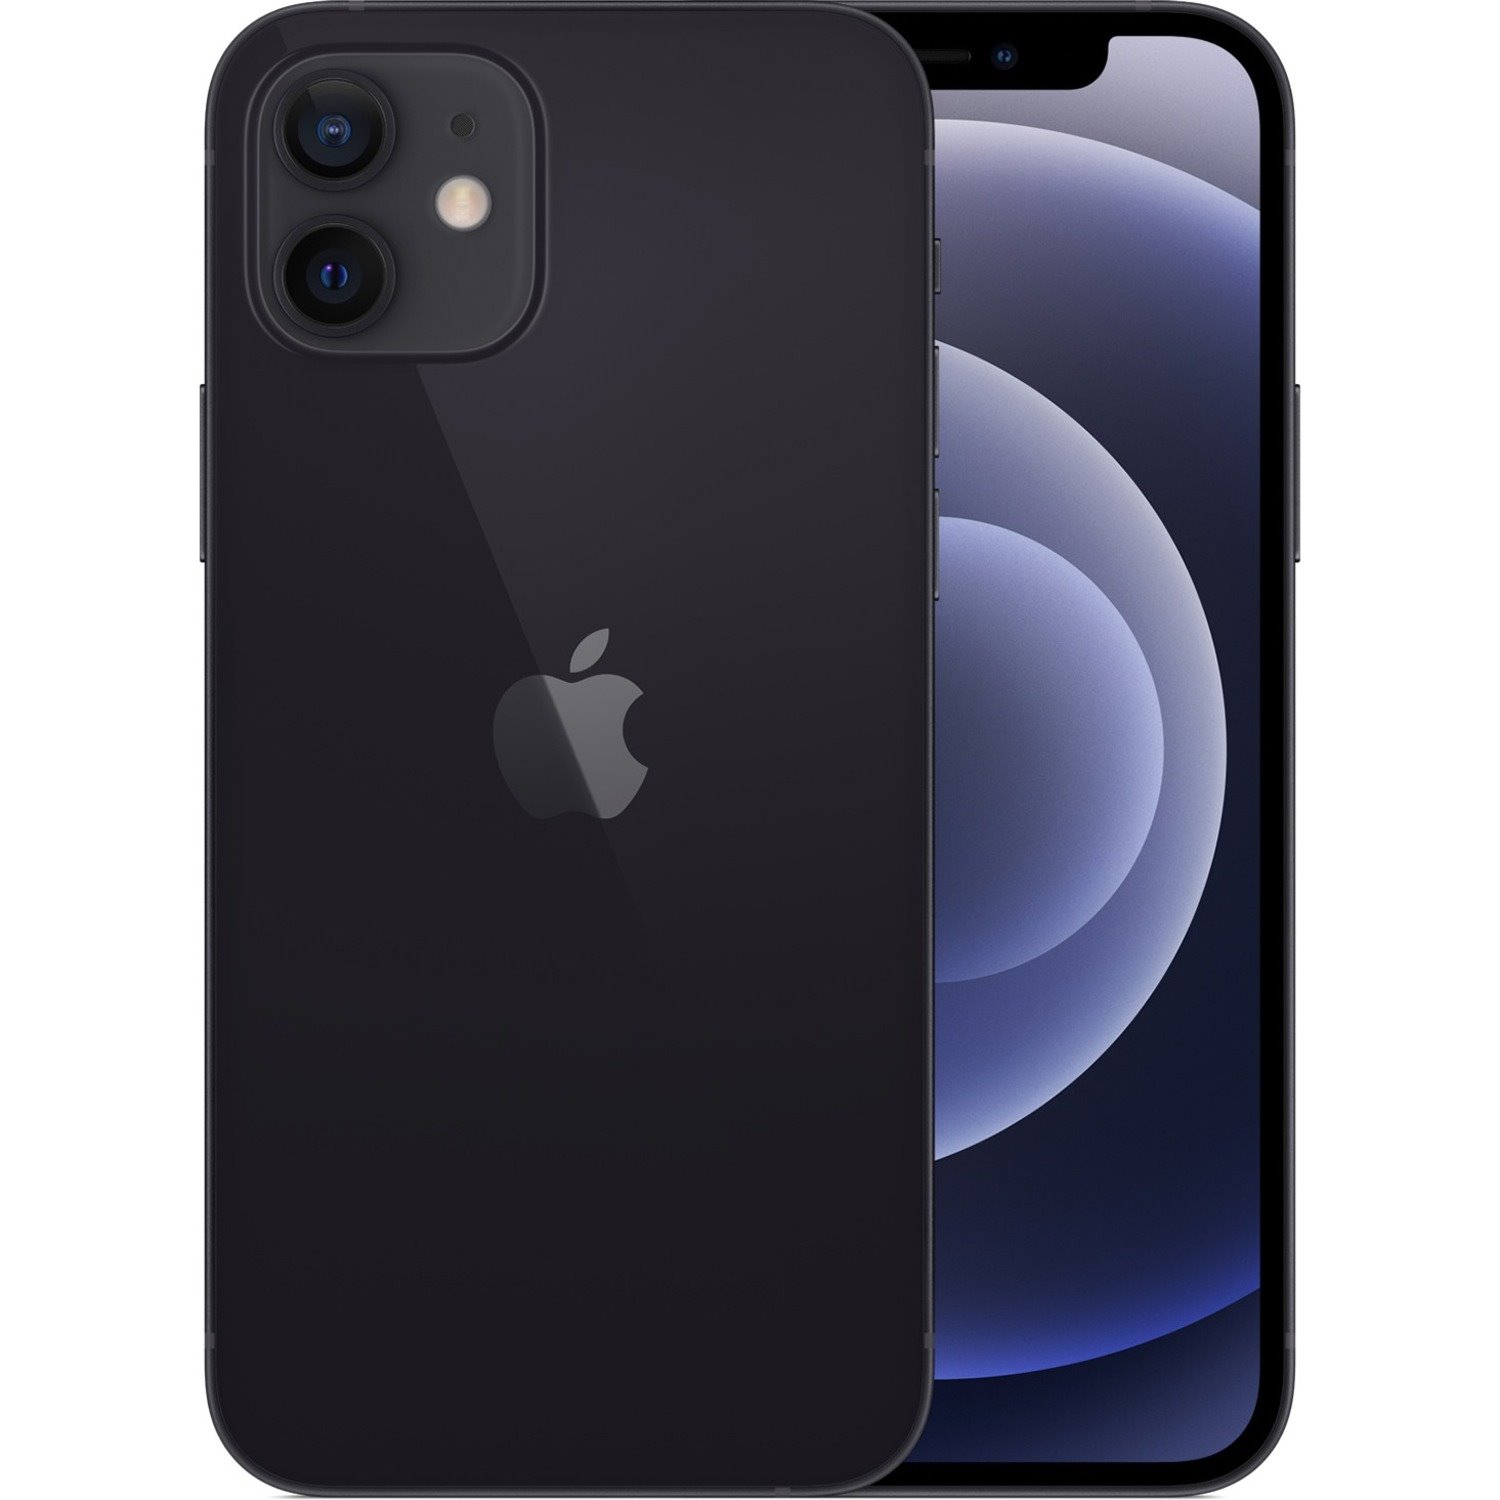 Apple iPhone 12 mini 256 GB Smartphone - 13.7 cm (5.4") OLED Full HD Plus 2340 x 1080 - Hexa-core (6 Core) - iOS 14 - 5G - Black